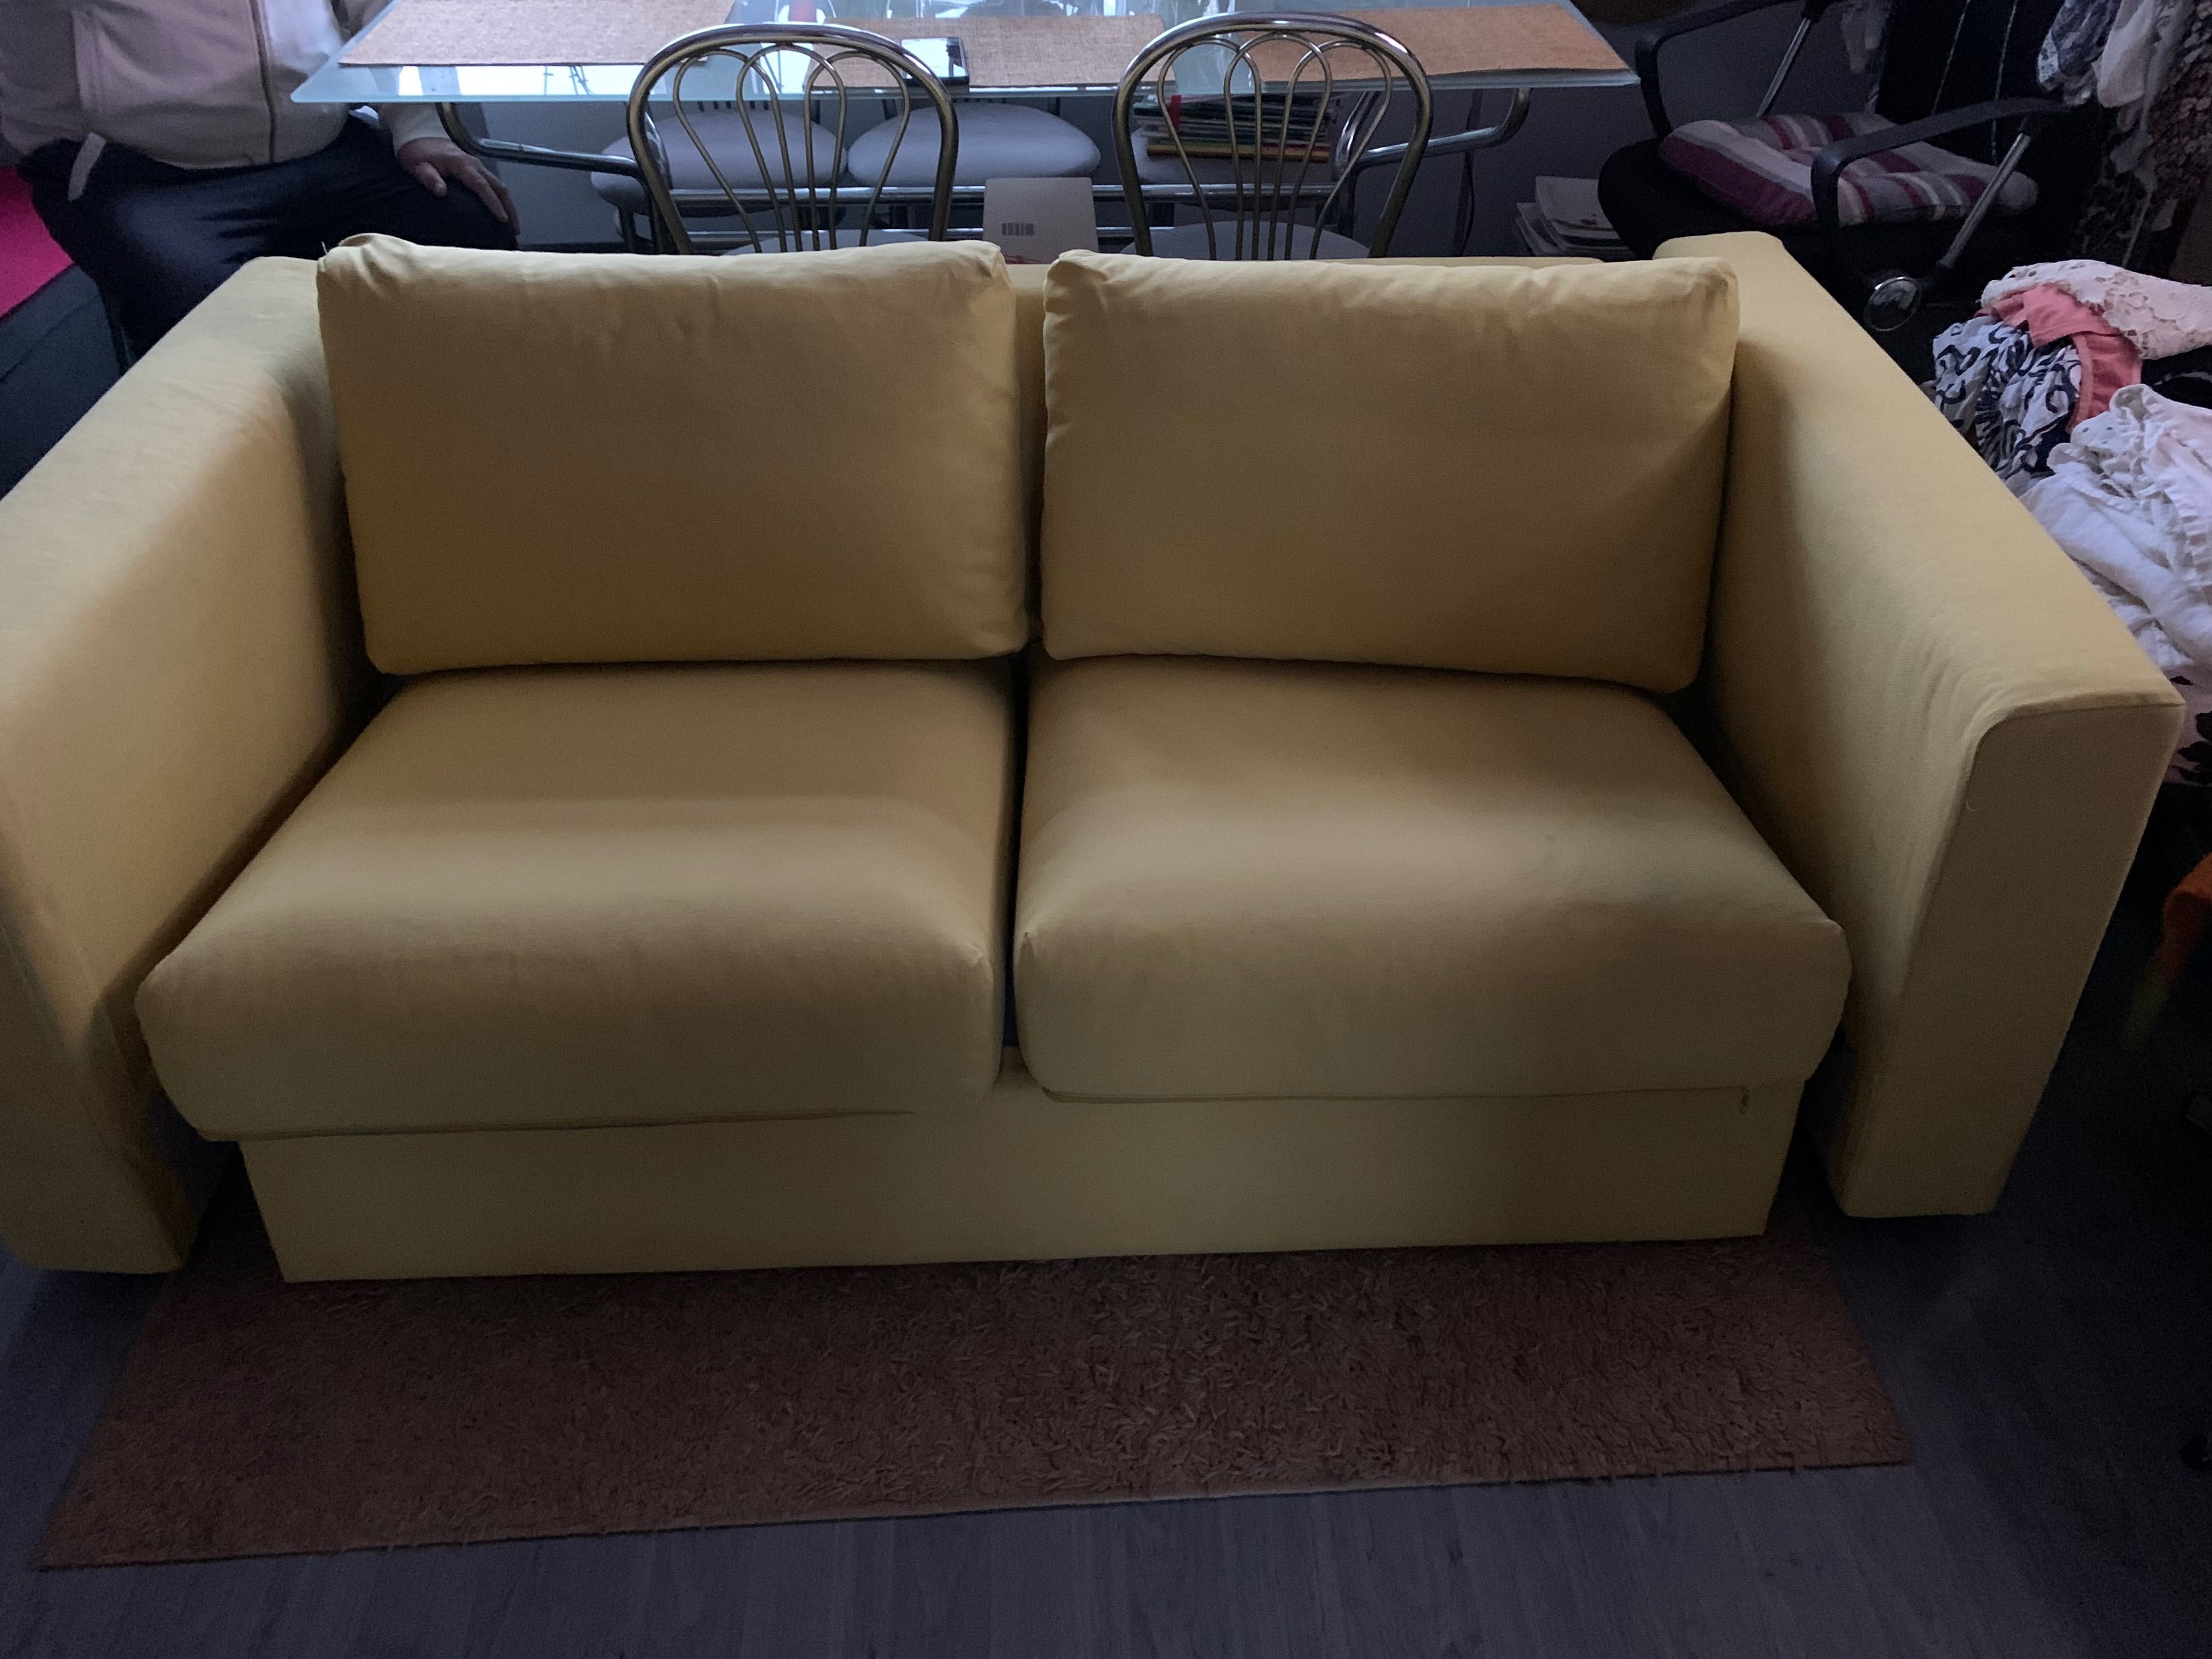 Vimle Ikea żółta sofa stan bdb